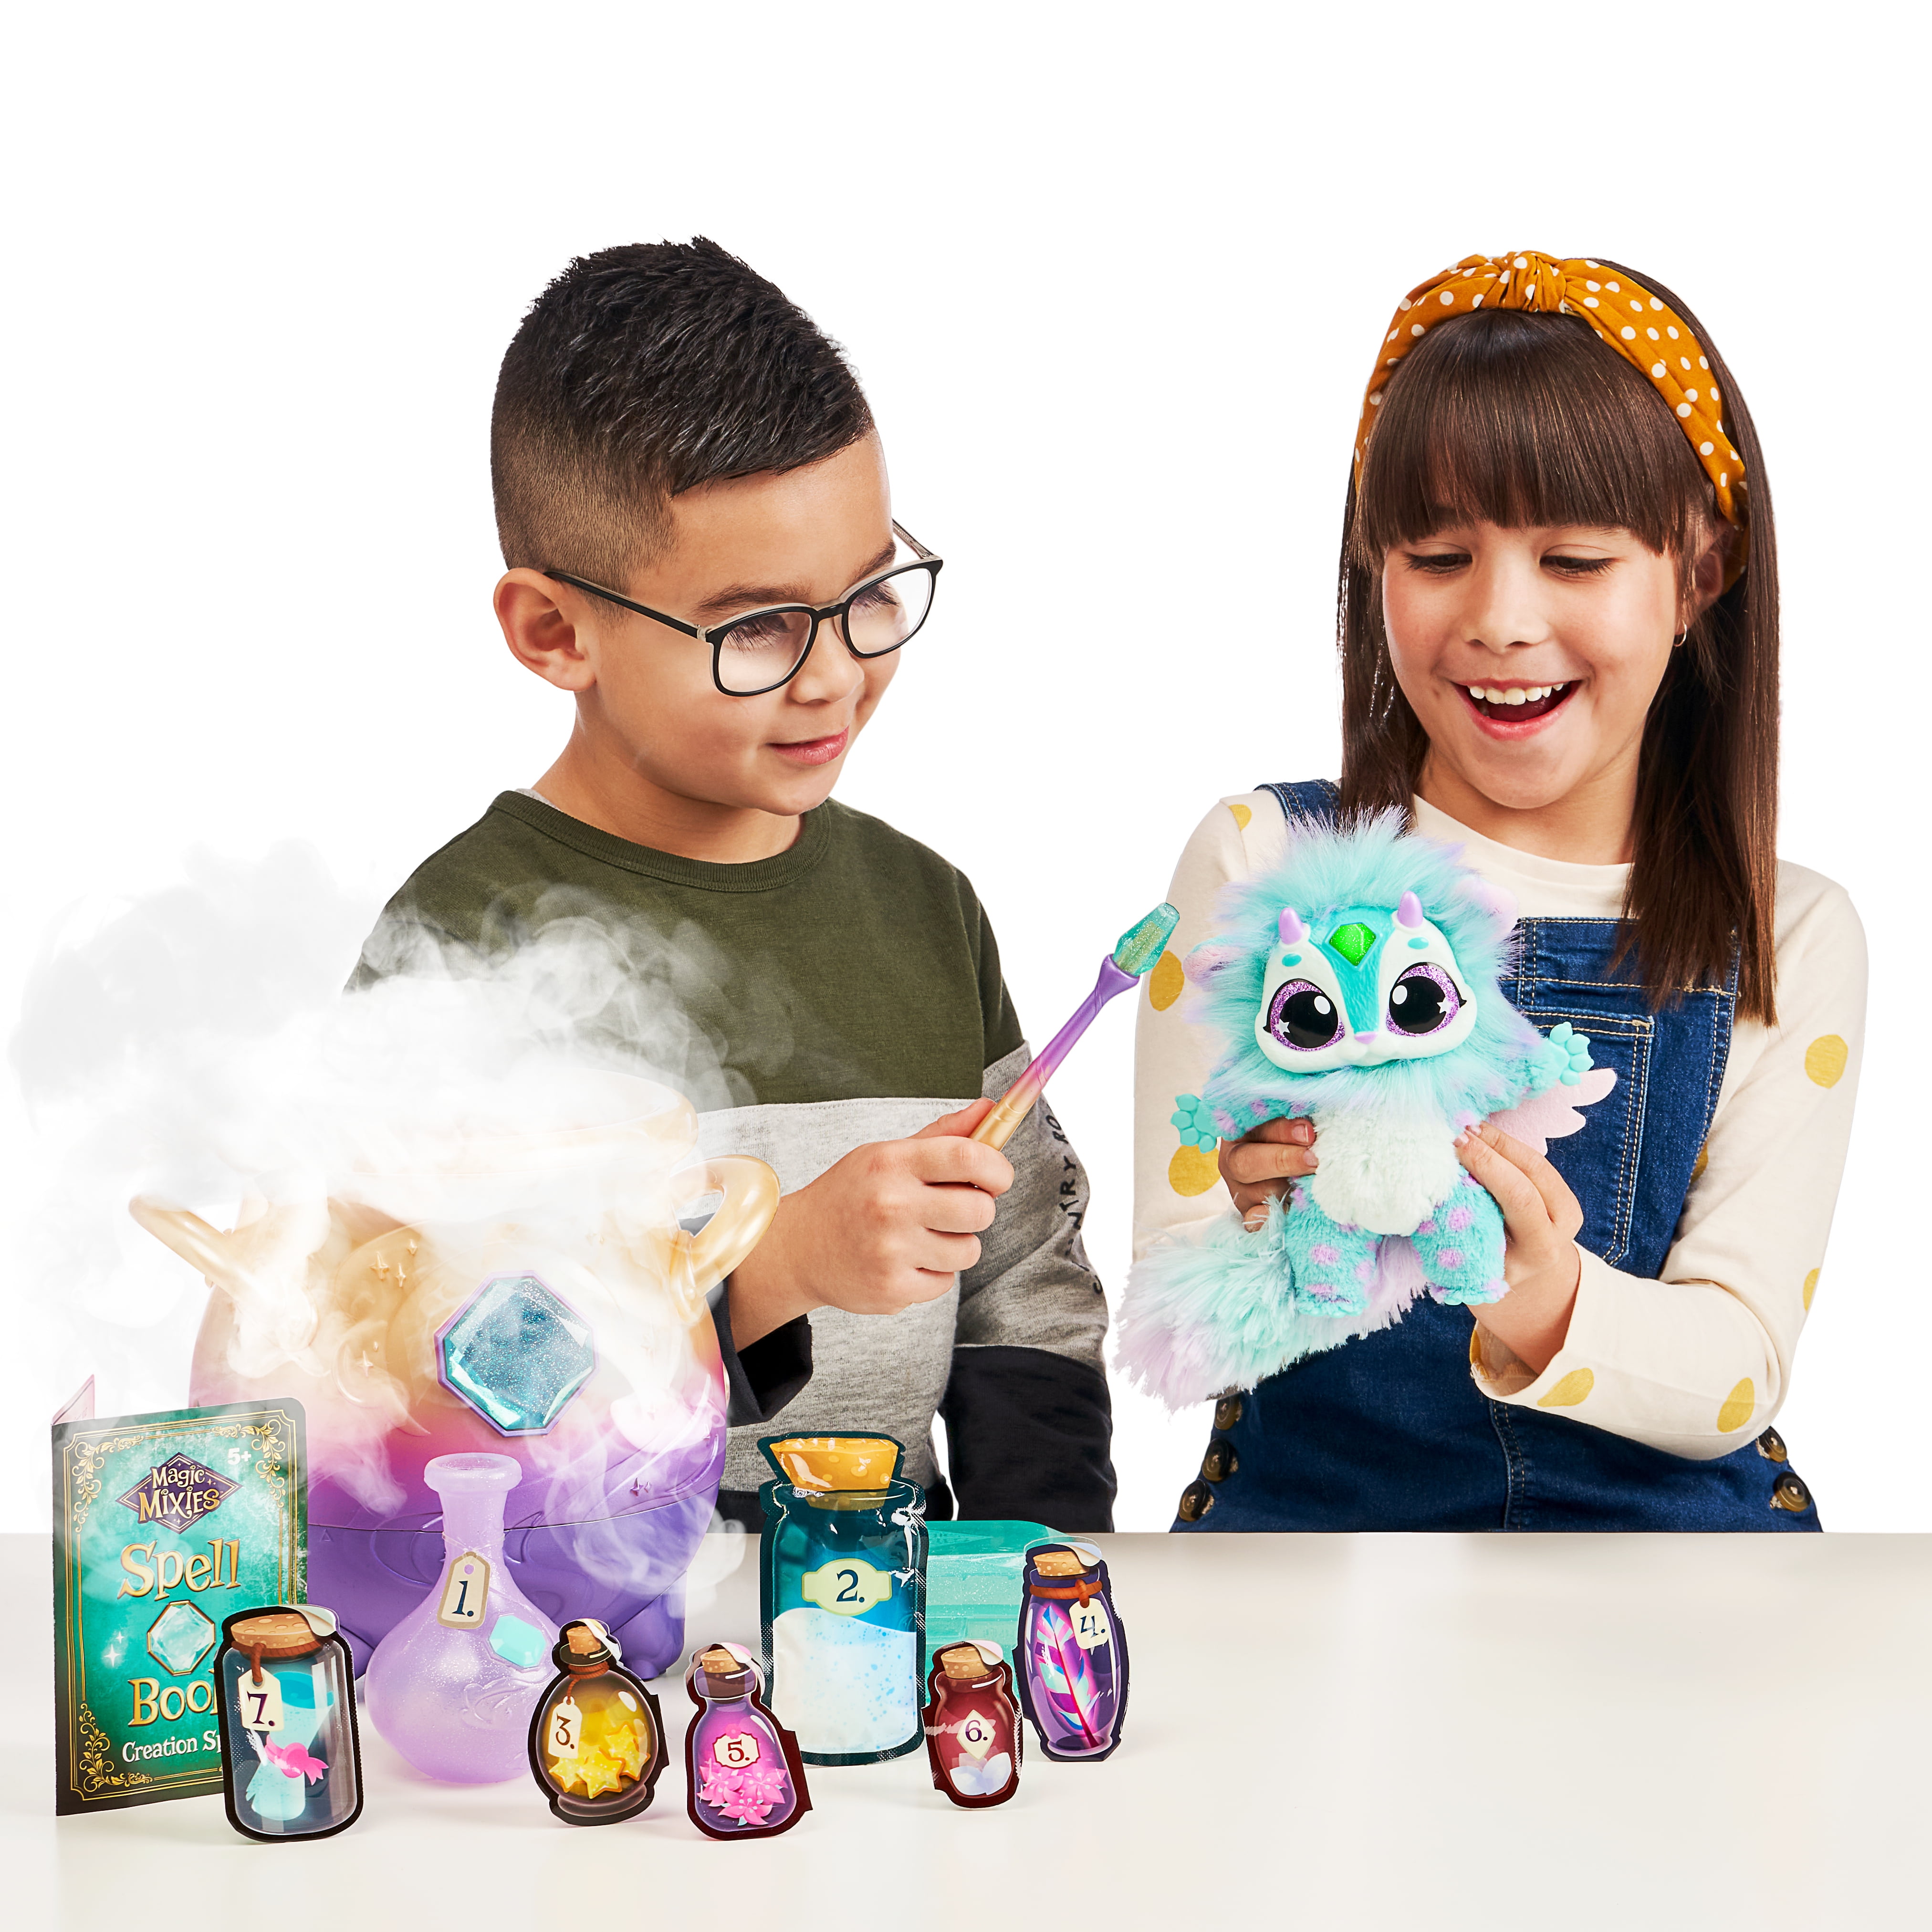 Magic Mixies Magic Cauldron Blue Spell Book Interative Hot 2021 Toy Gift Potions 